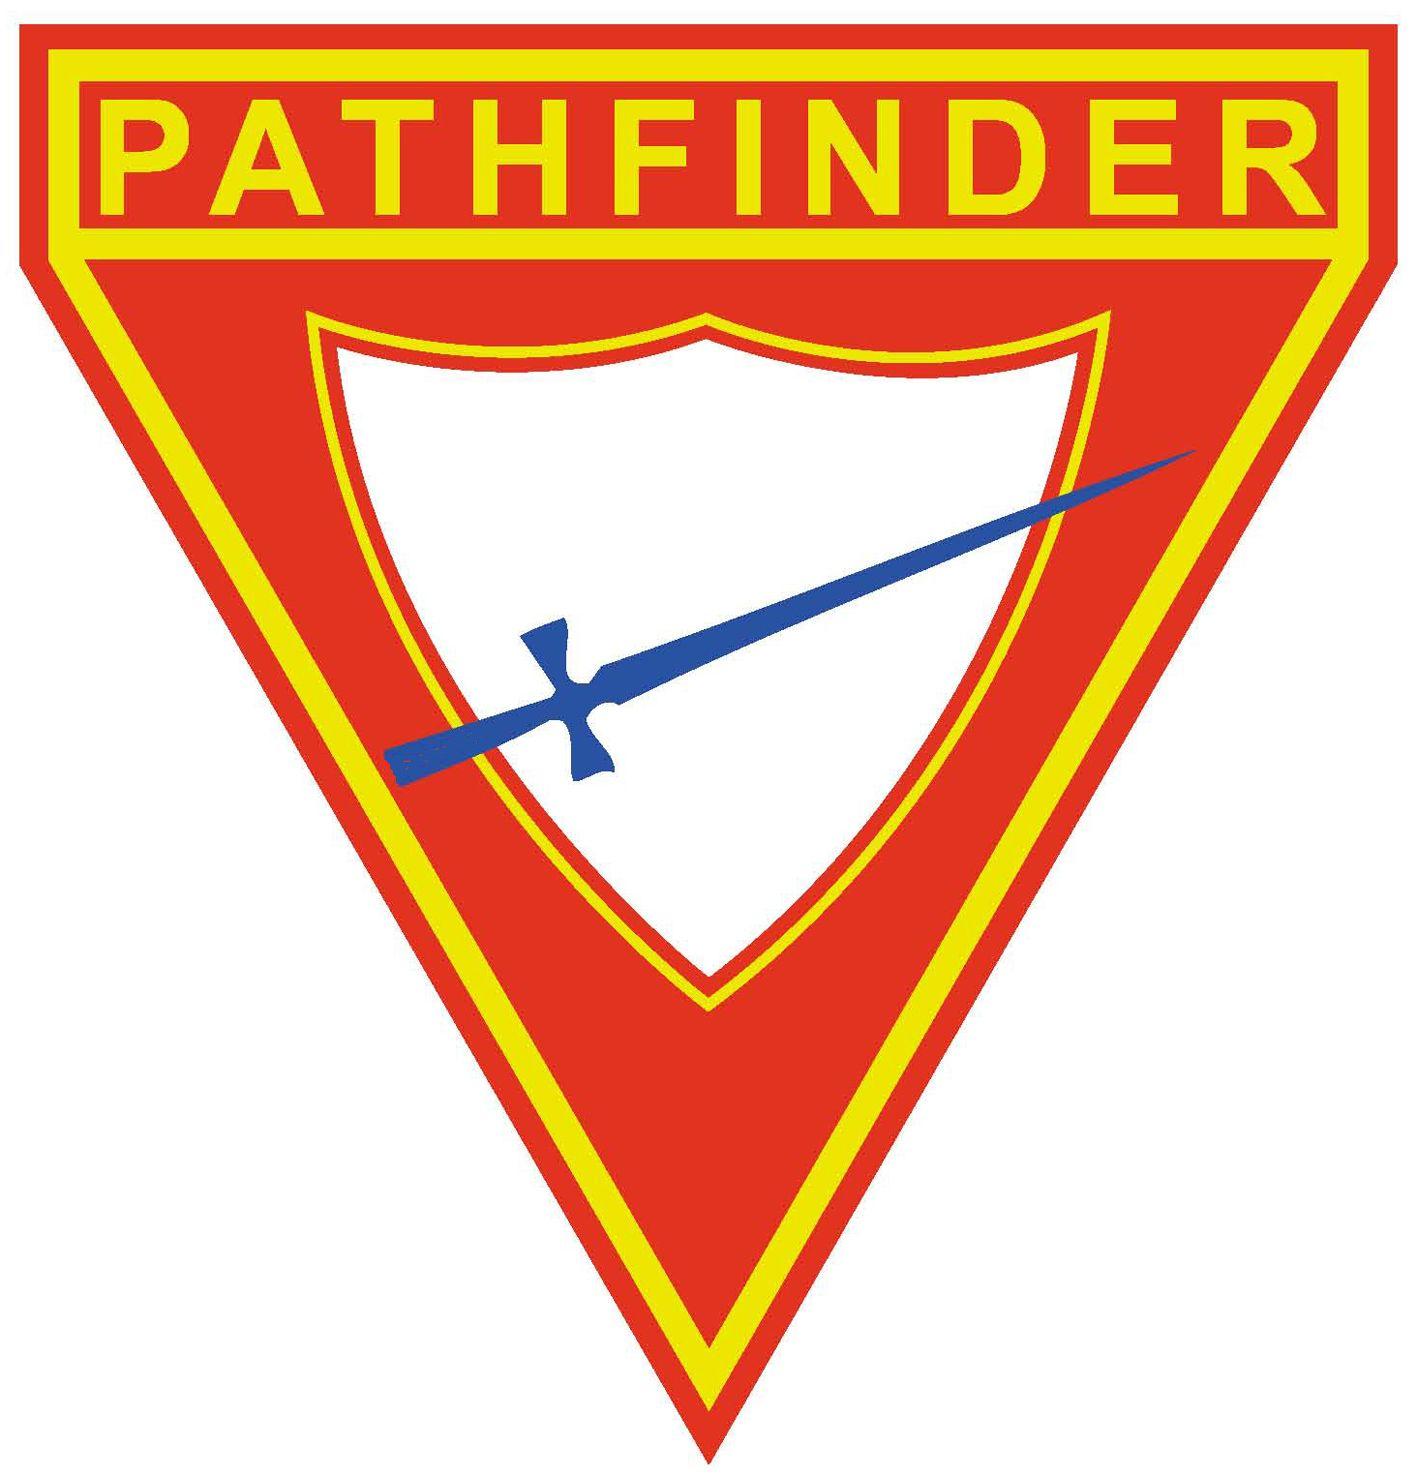 Pathfinder Logo - Pathfinder Club Logos - Adventist Youth Ministries - NAD